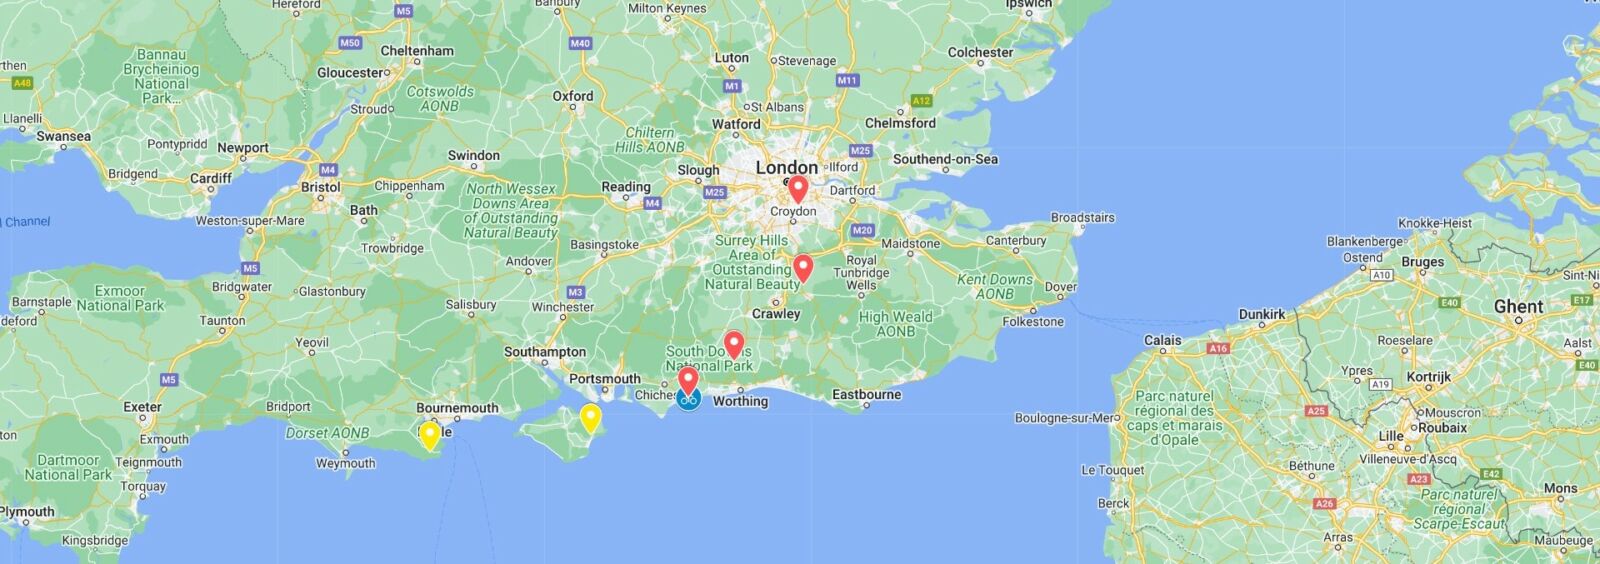 East England map